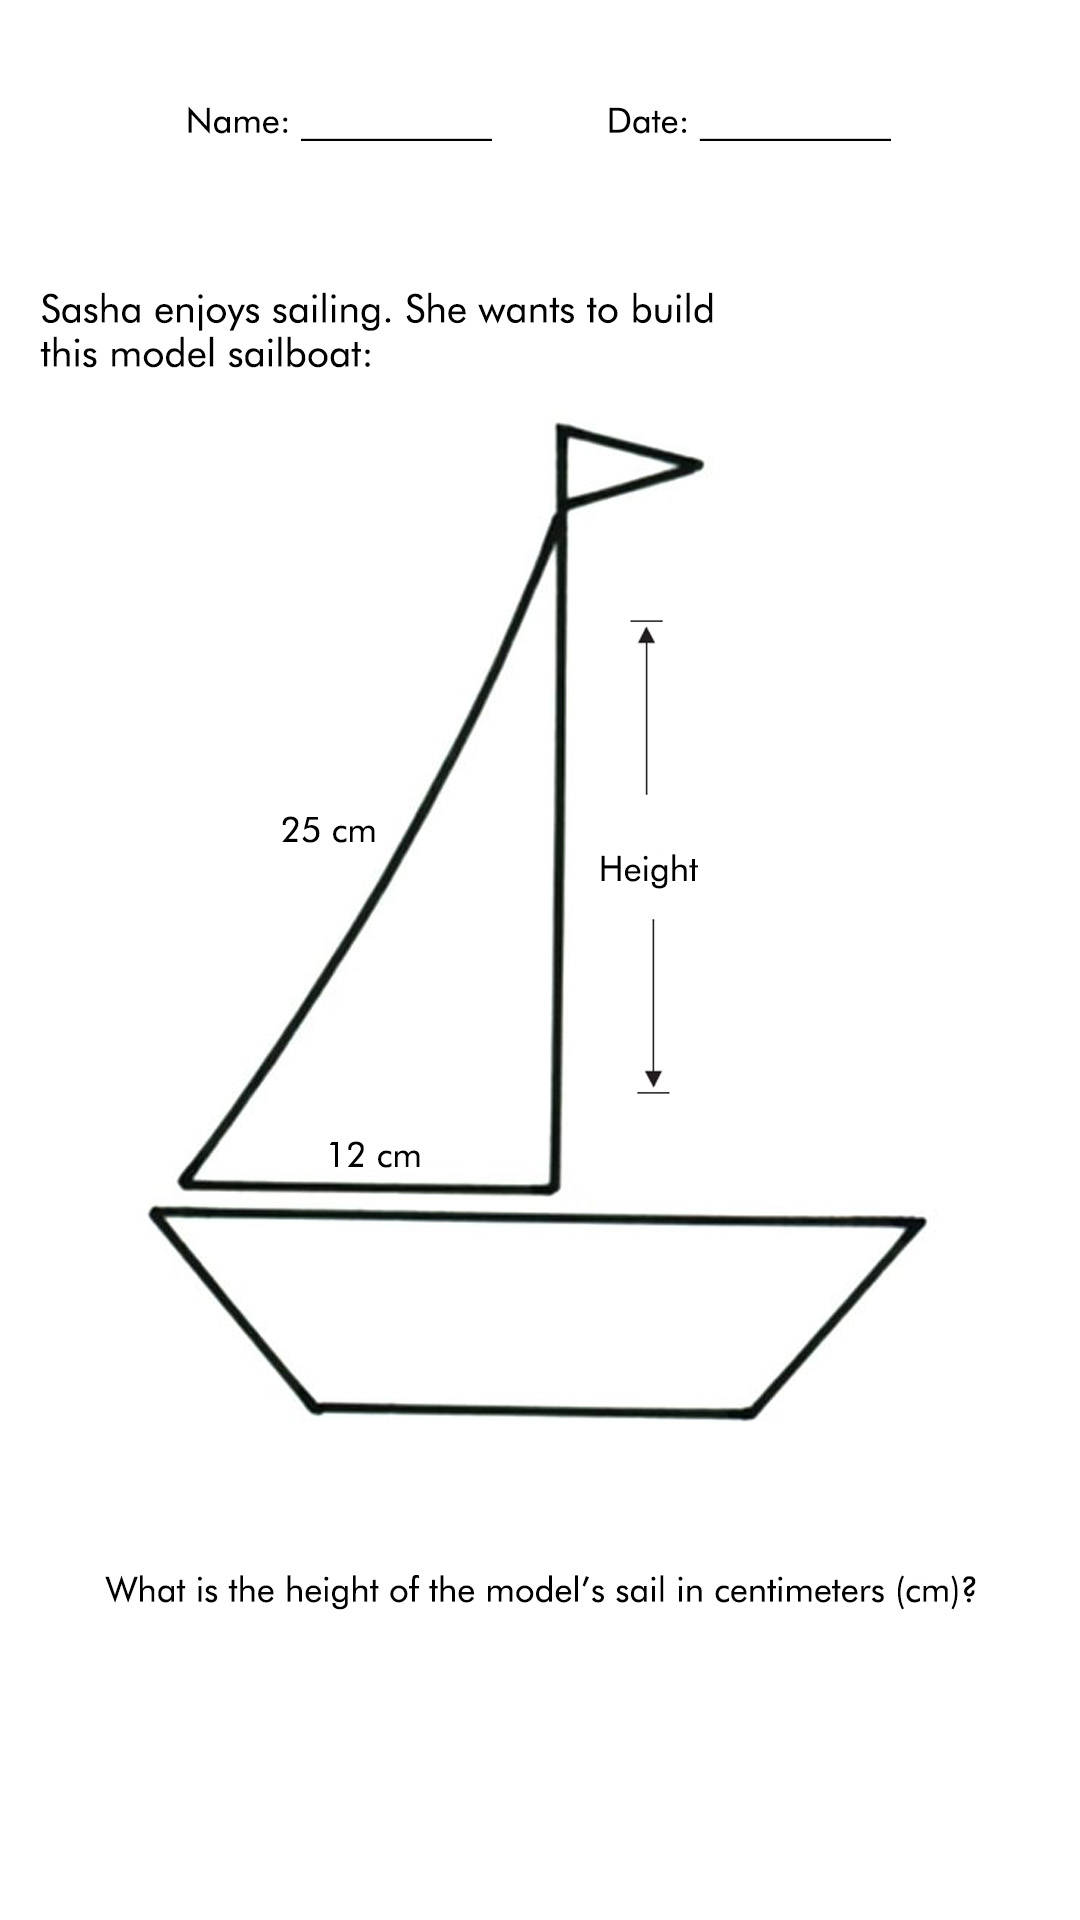 Real Life Pythagorean Theorem Problems Image